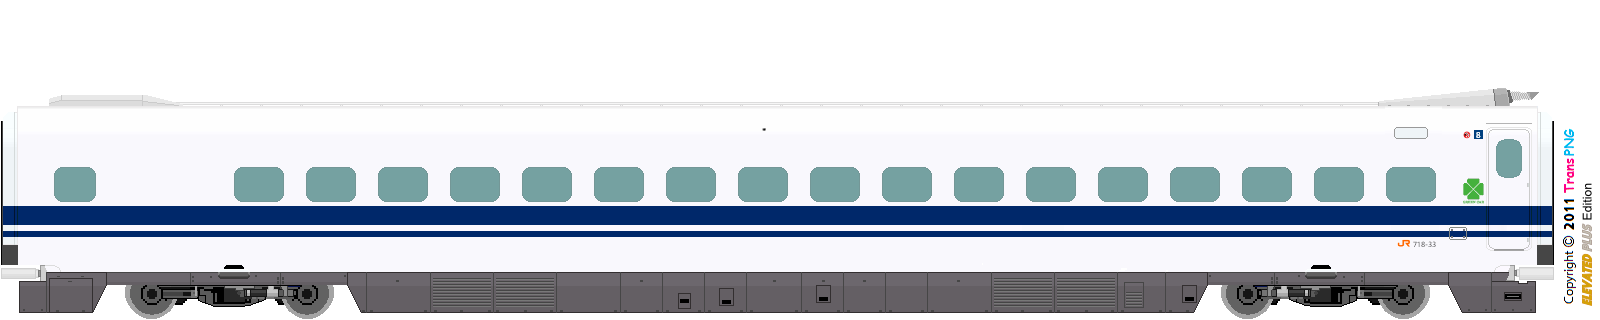 [9010] Central Japan Railway 52287586068_0ea54ba05e_o